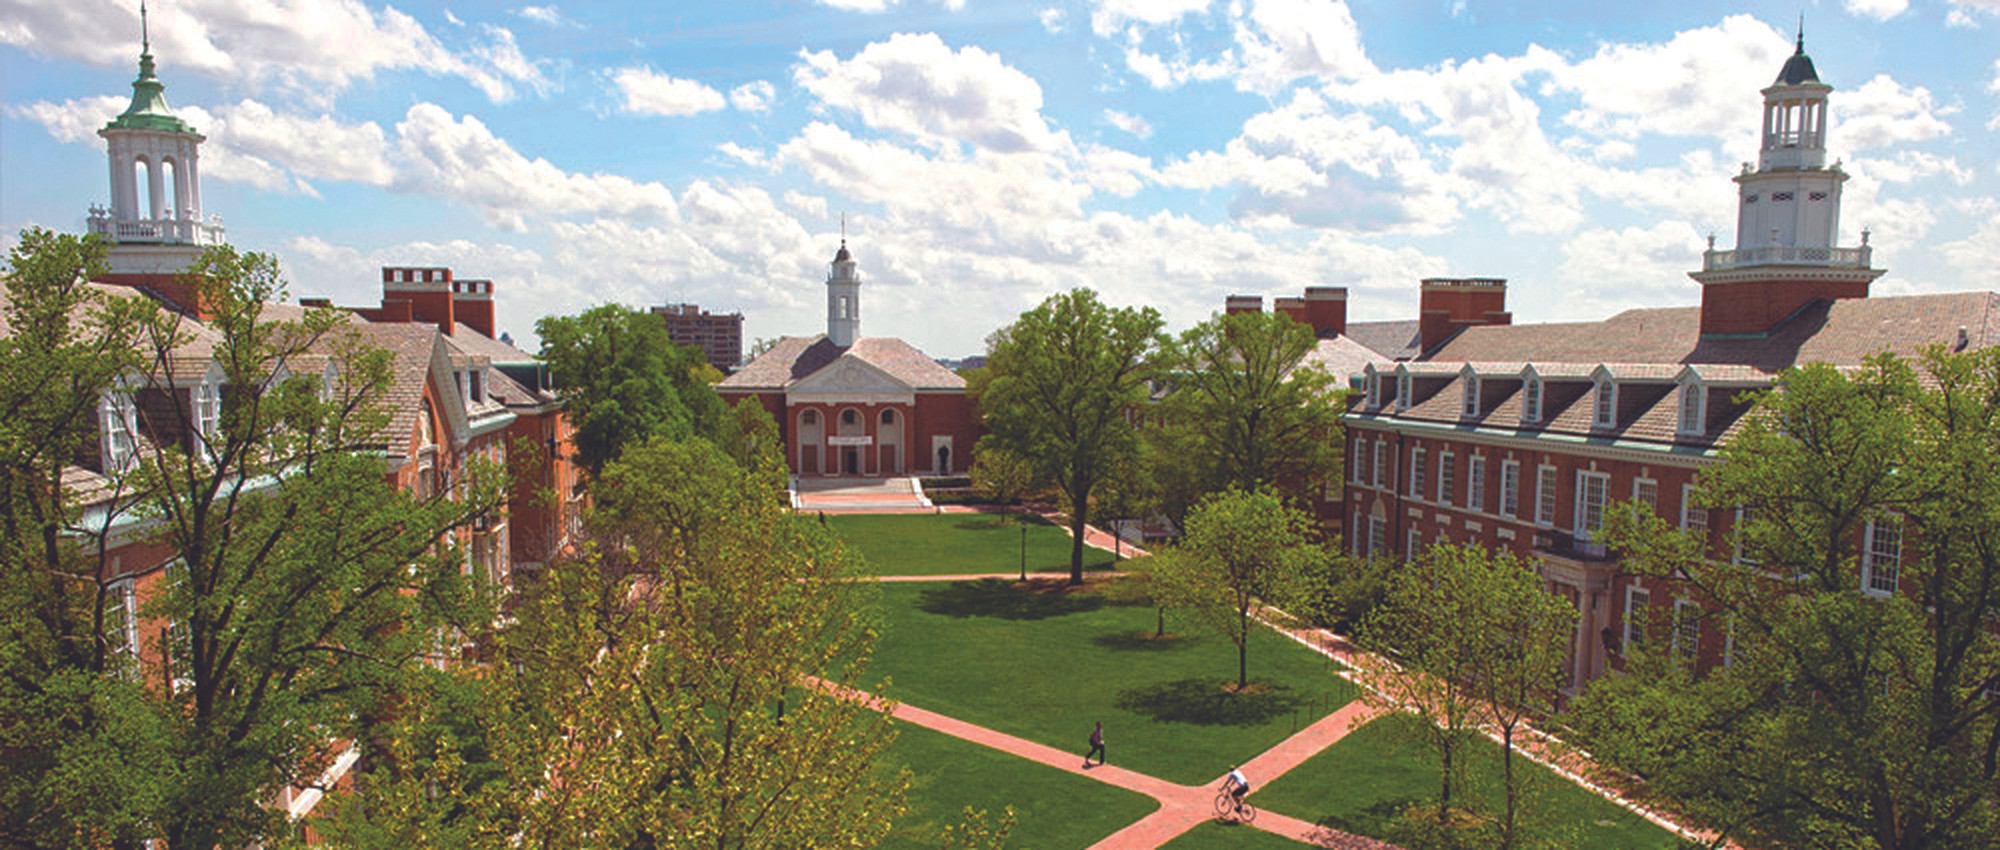 Campus shot of Johns Hopkins University